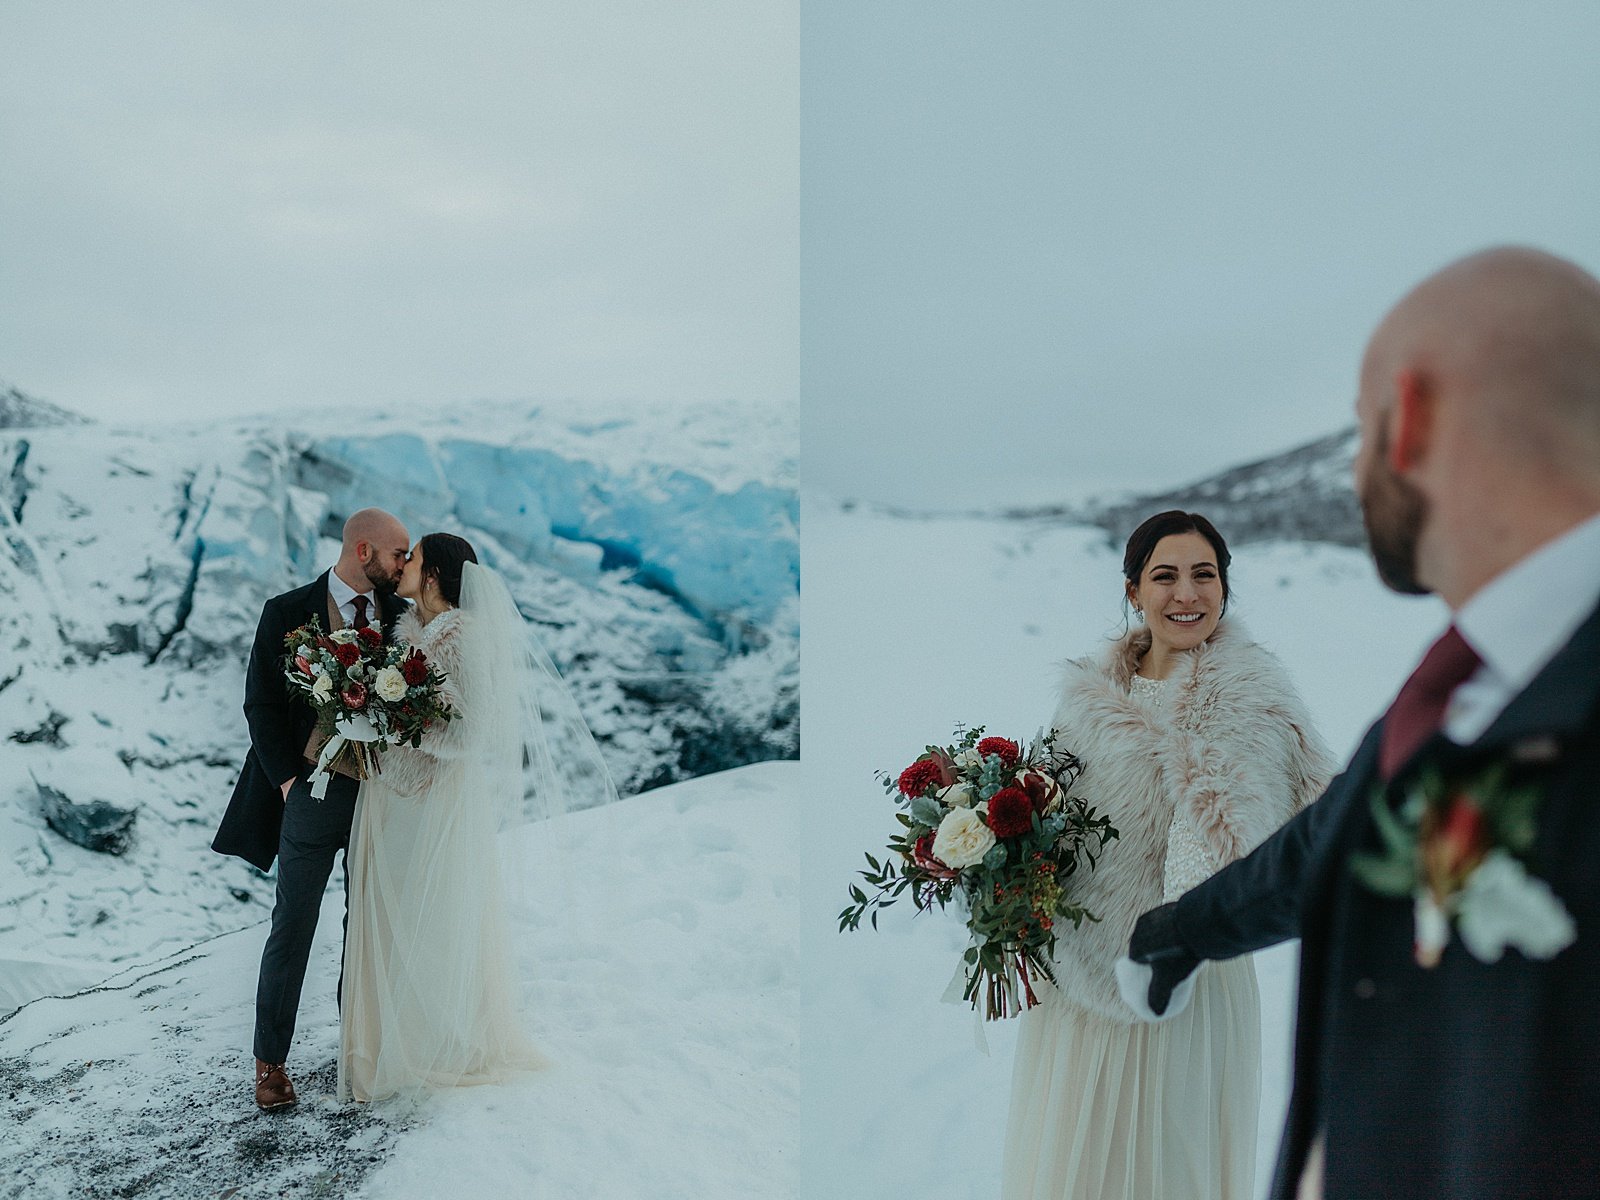  Newlyweds sharing a kiss on a snowy mountain by  Alaska wedding photographer, Rachel Struve  